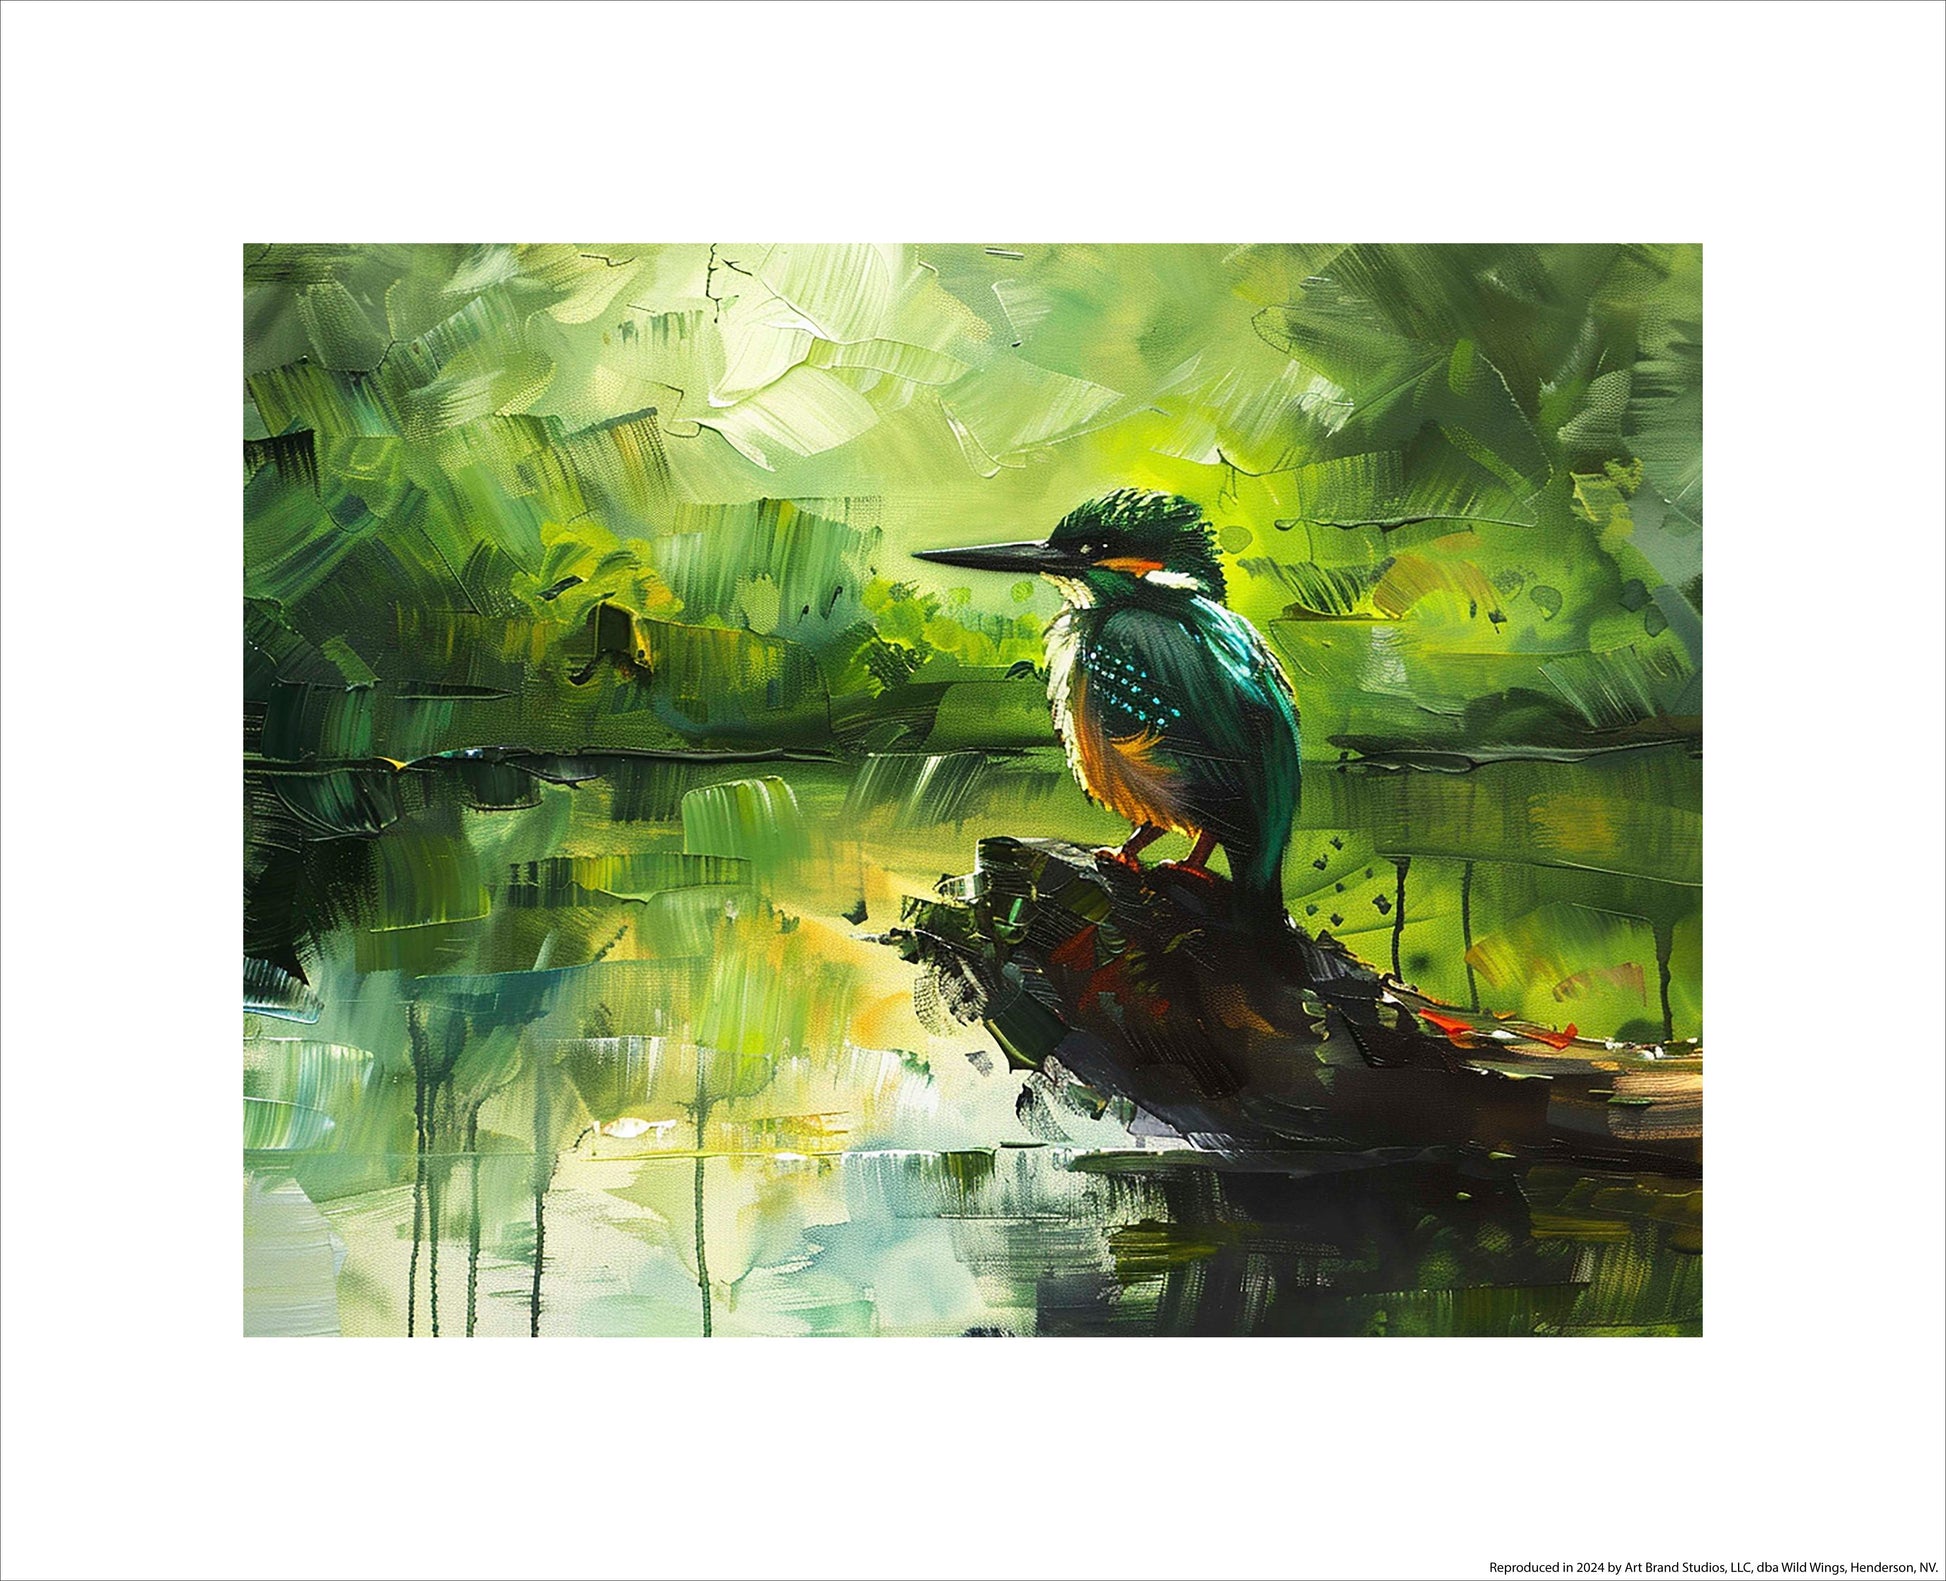 168883_Rippling Realm - Green Kingfisher.jpg